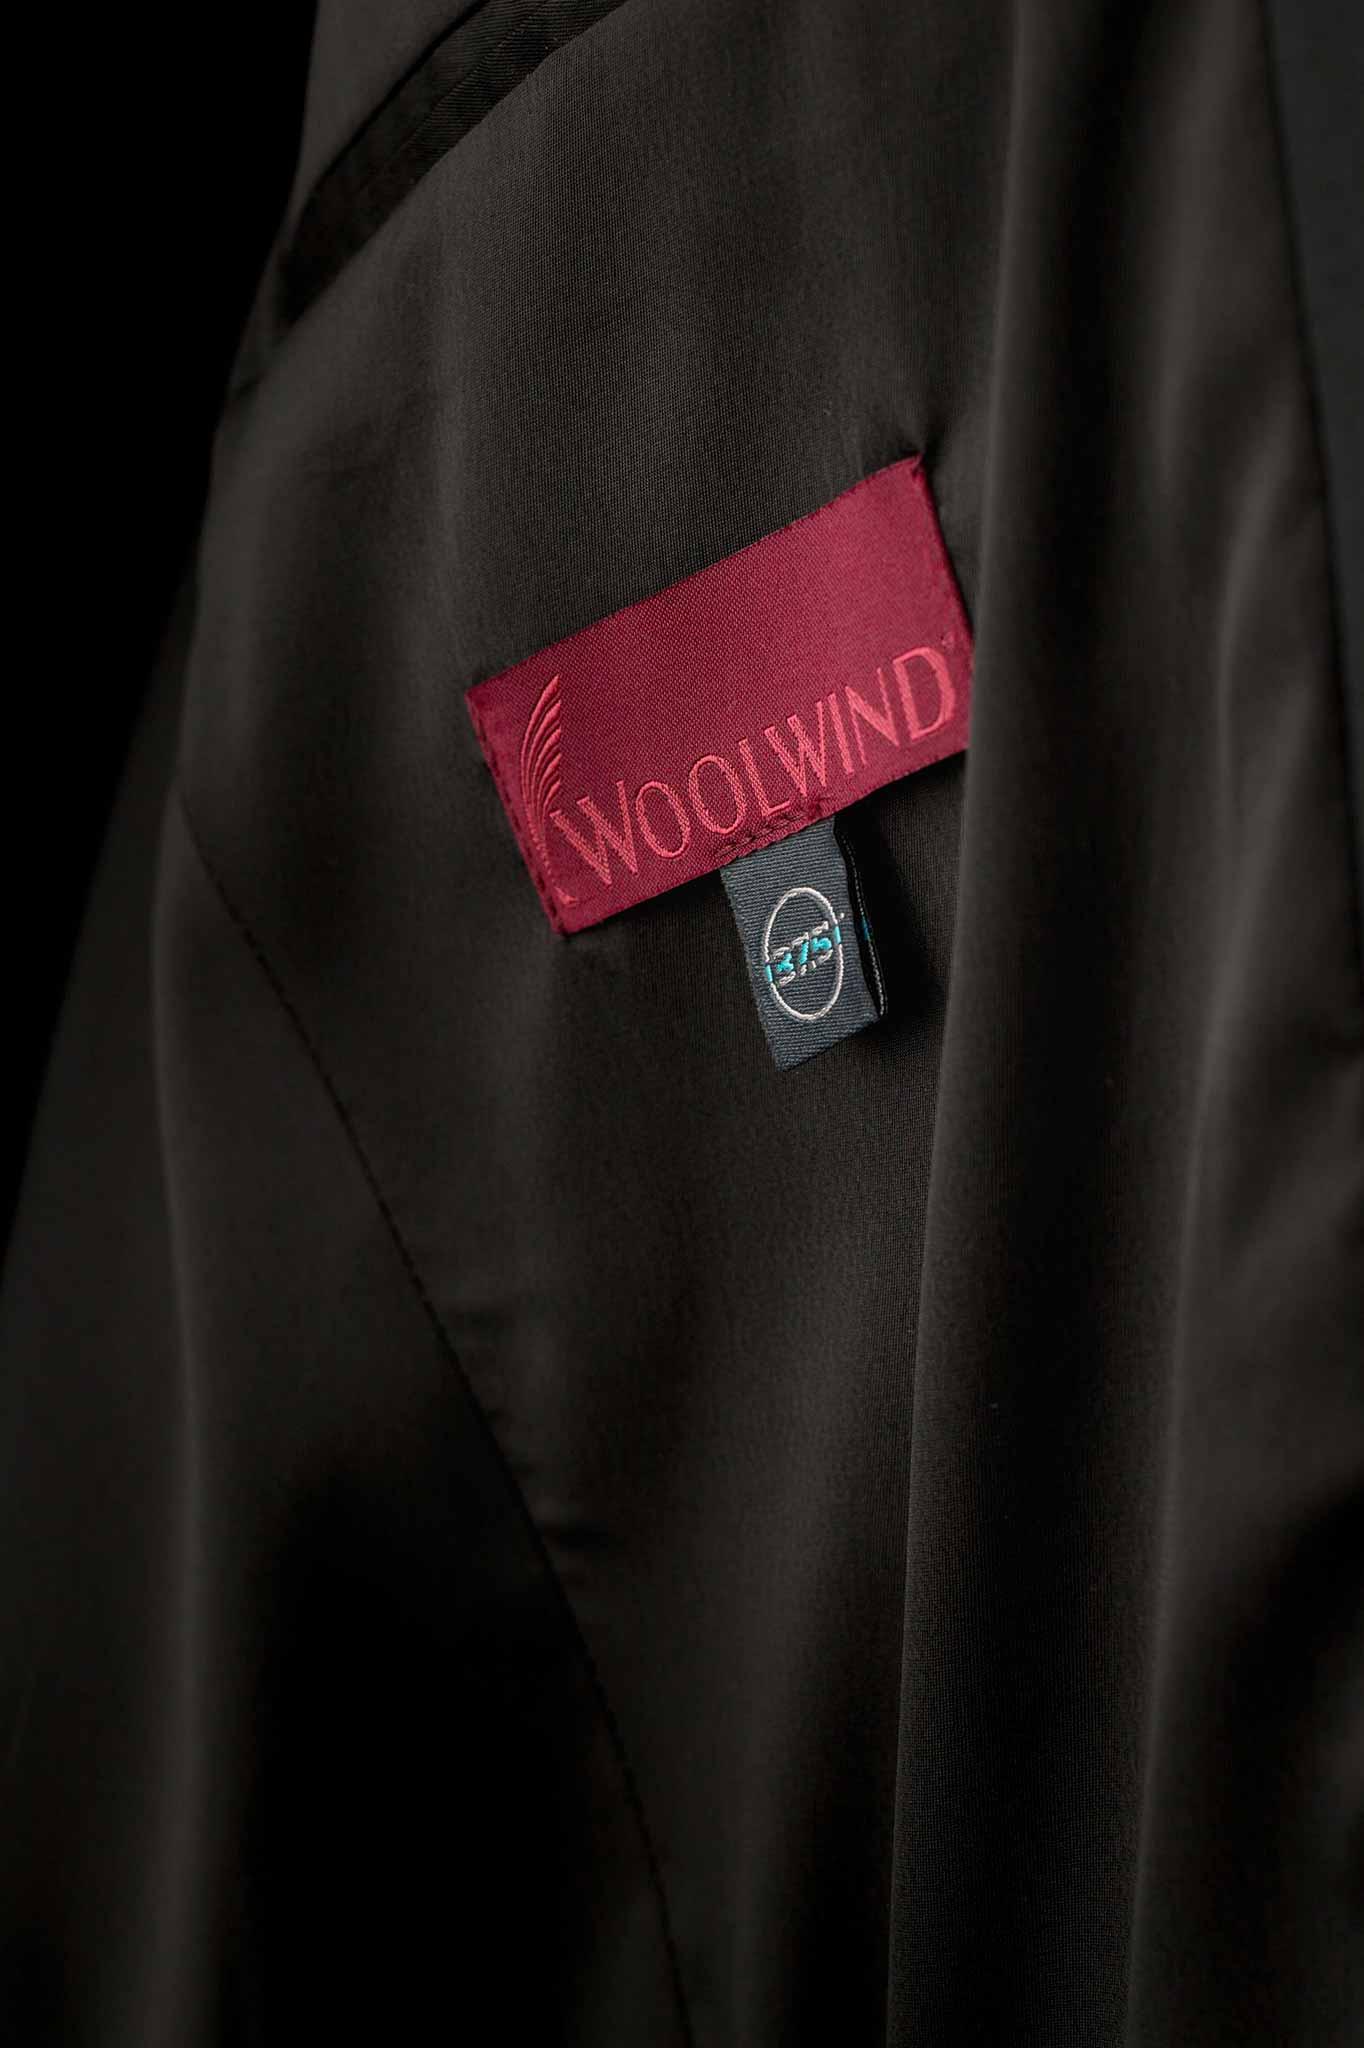 Woolwind Tailcoat Jacket 1.0 - Woolwind